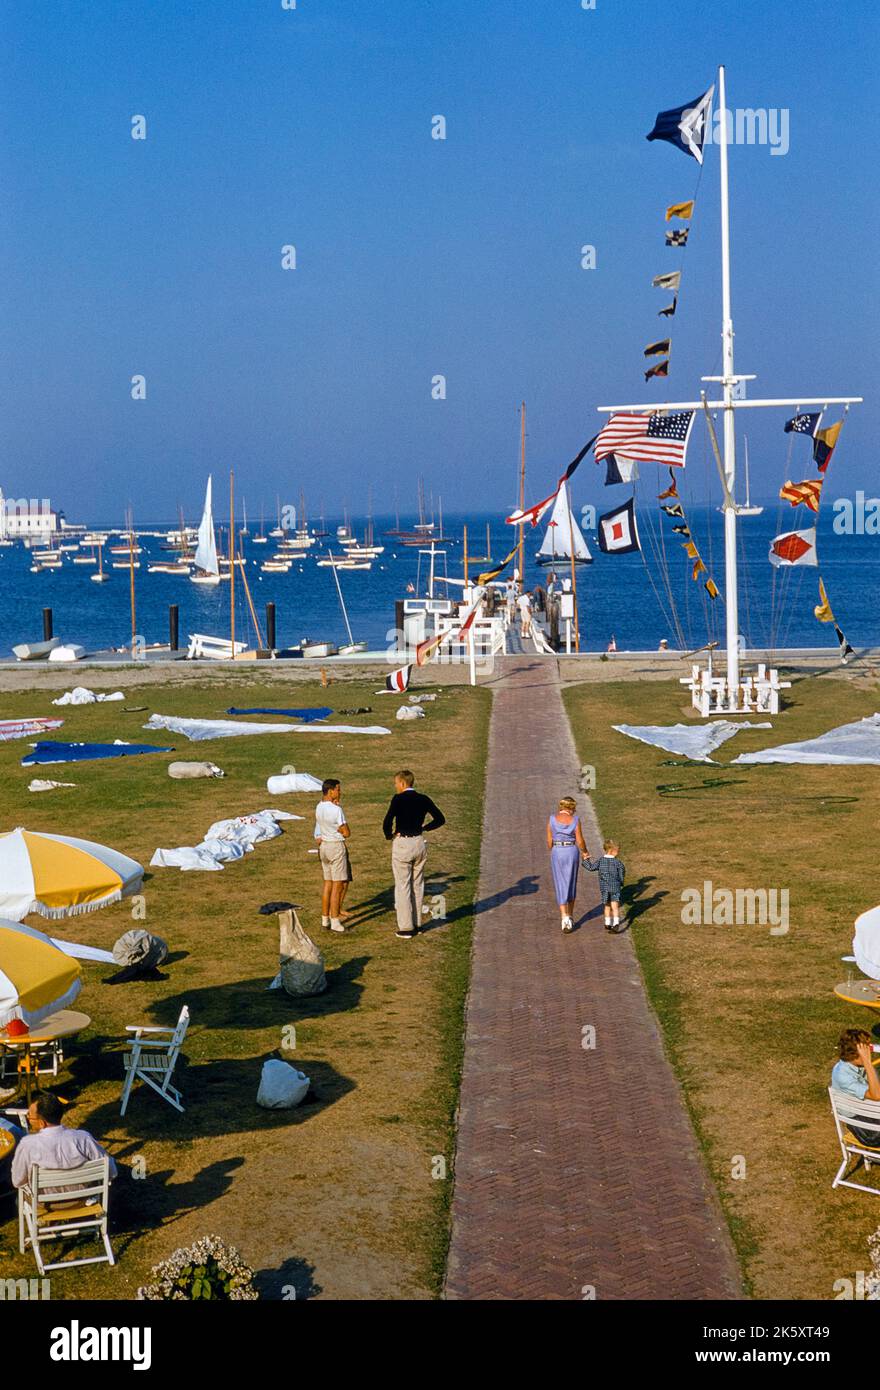 Harbor, Nantucket, Massachusetts, Stati Uniti, toni Frissell Collection, Agosto 1957 Foto Stock